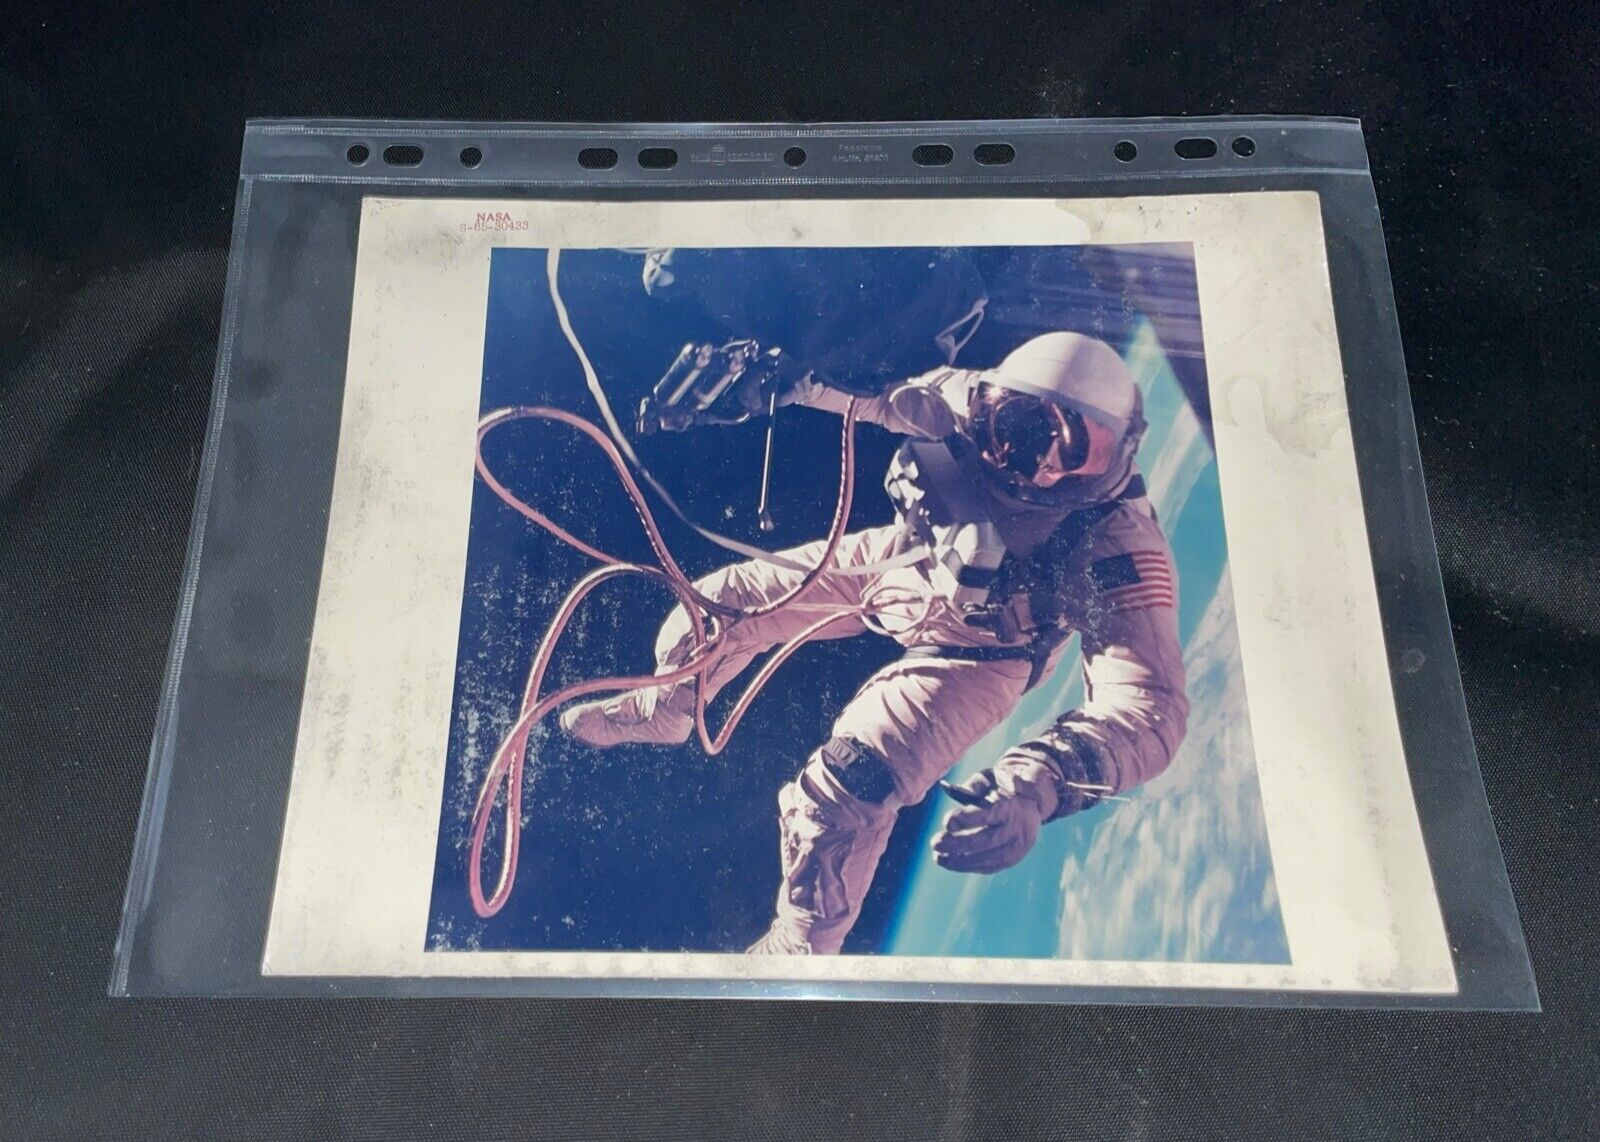 Nasa Gemini Photograph Ed White Astronaut Spacewalk Kodak Paper